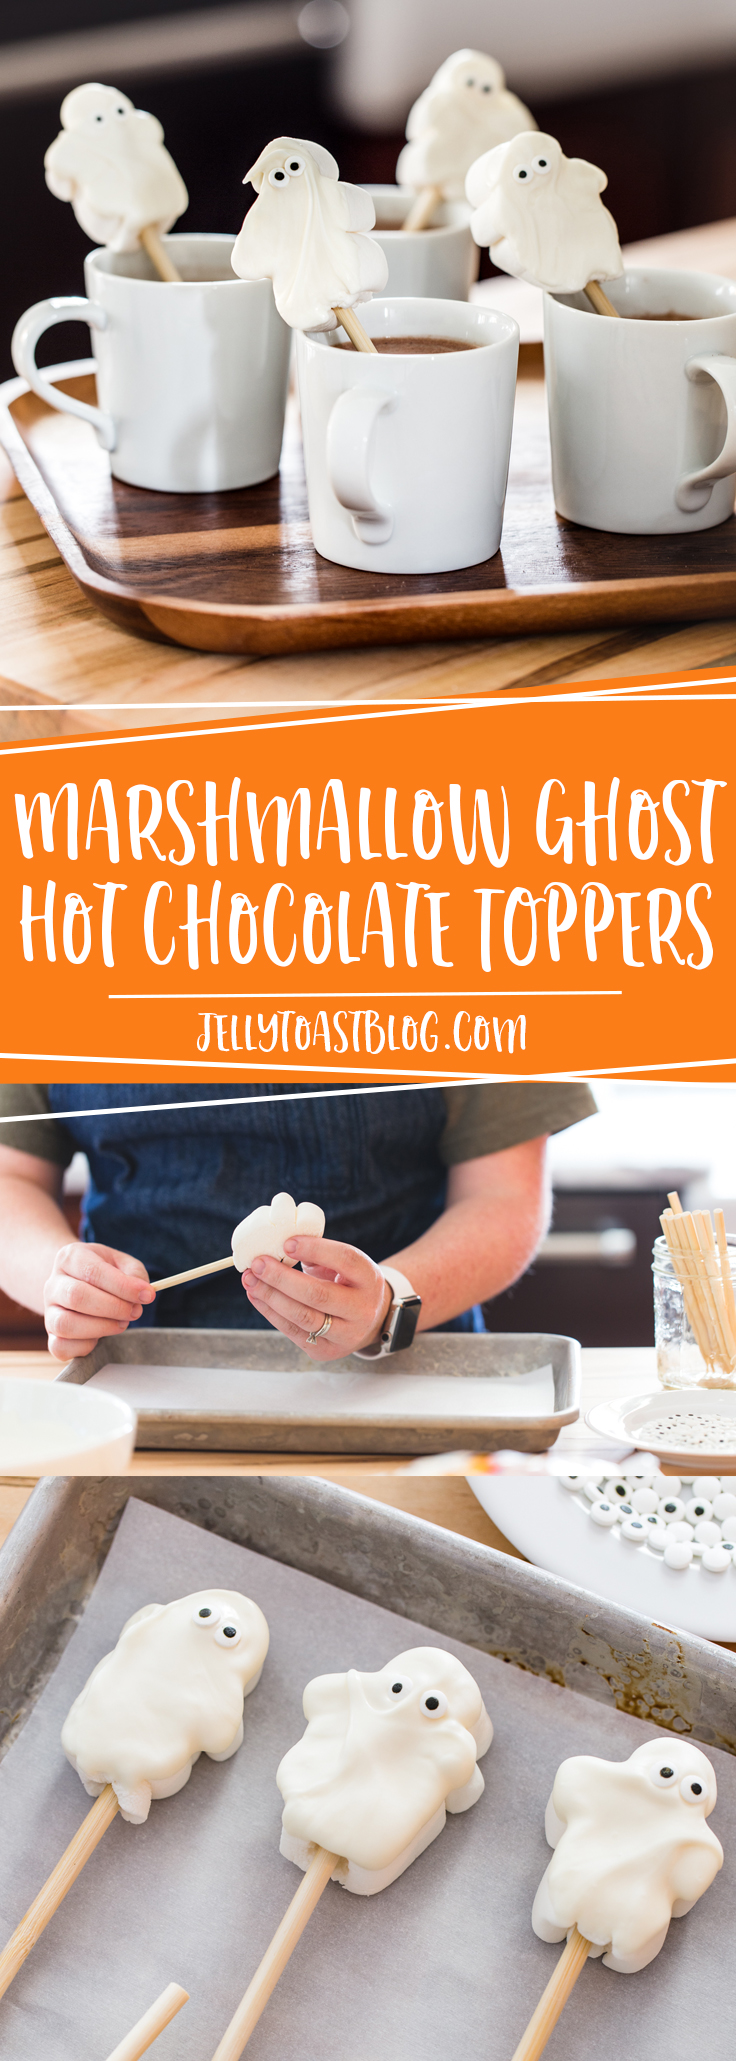 https://jellytoastblog.com/wp-content/uploads/2017/10/Marshmallow-Ghost-Hot-Chocolate-Toppers.jpg